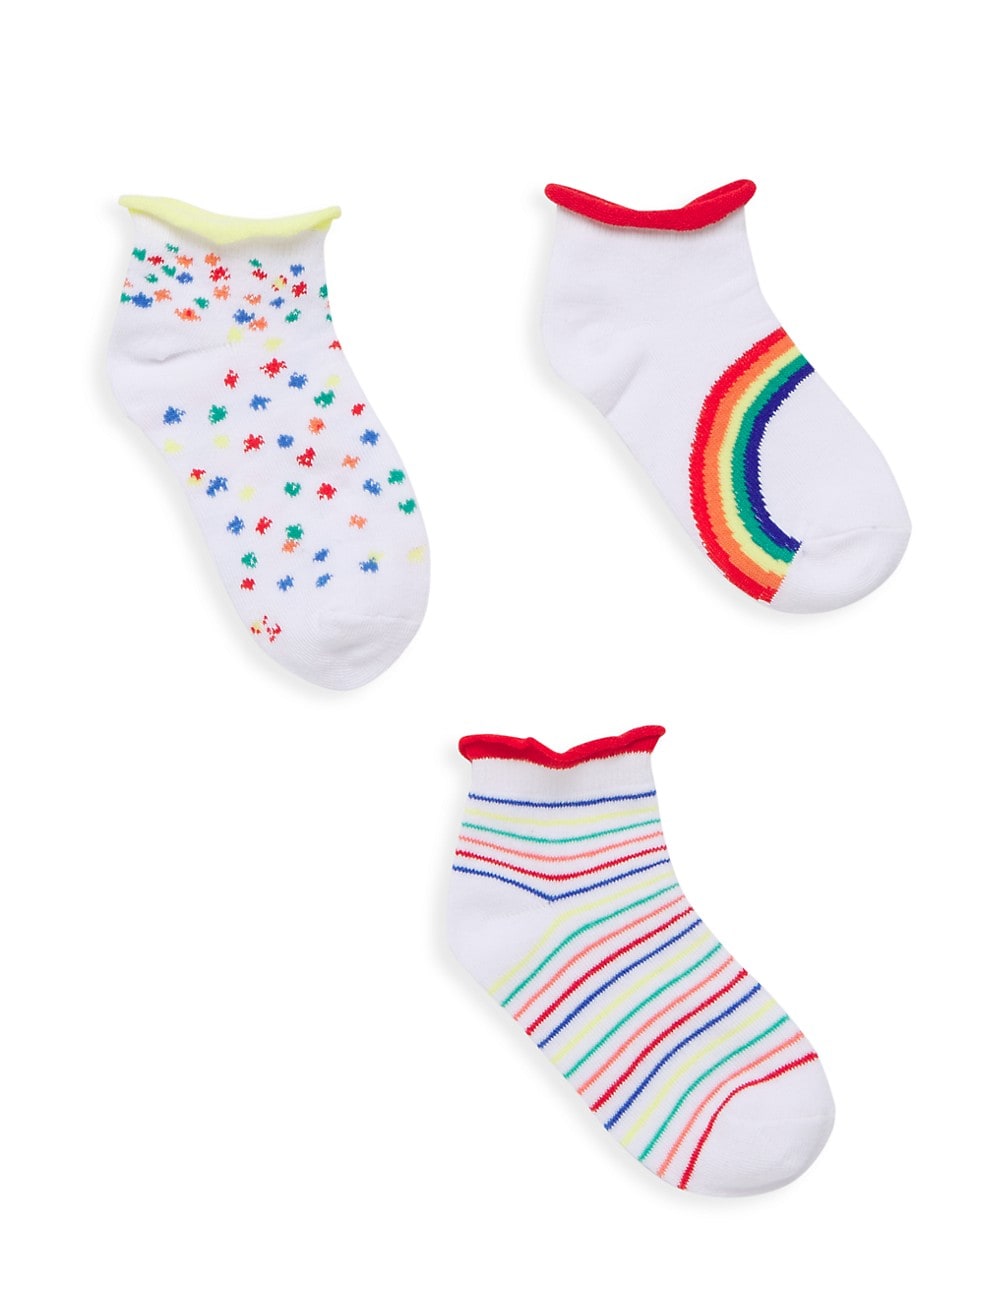 3-Pack Isaac Mizrahi Loves Crayola Little Kid’s Ankle Socks (Various Styles) $4.50, Slip-On Sneakers $18.75 + Free Shipping